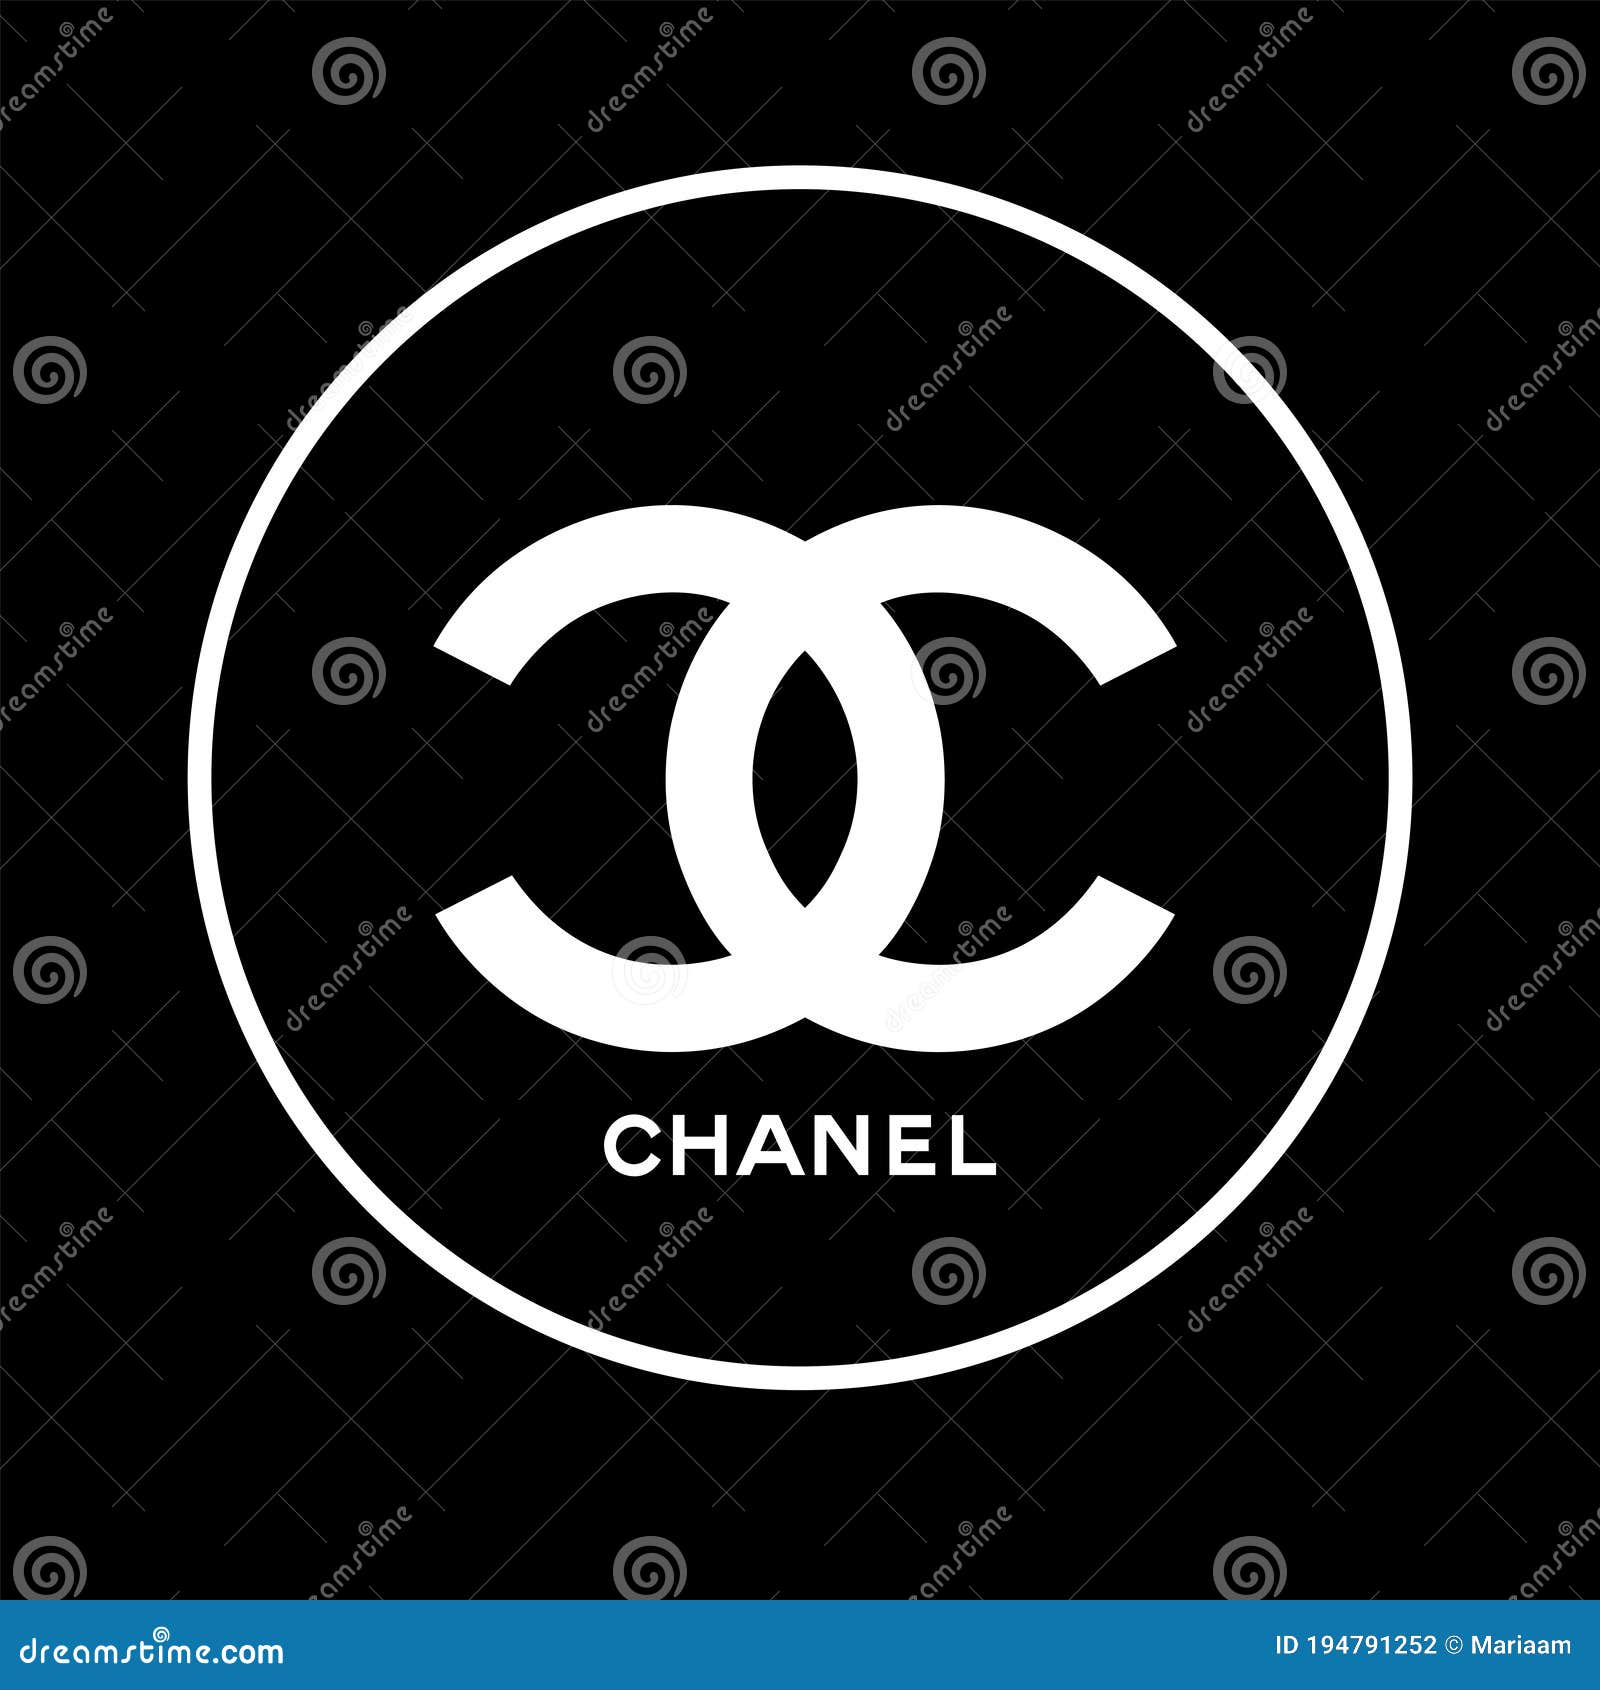 Download Chanel Logo Clipart HQ PNG Image  FreePNGImg